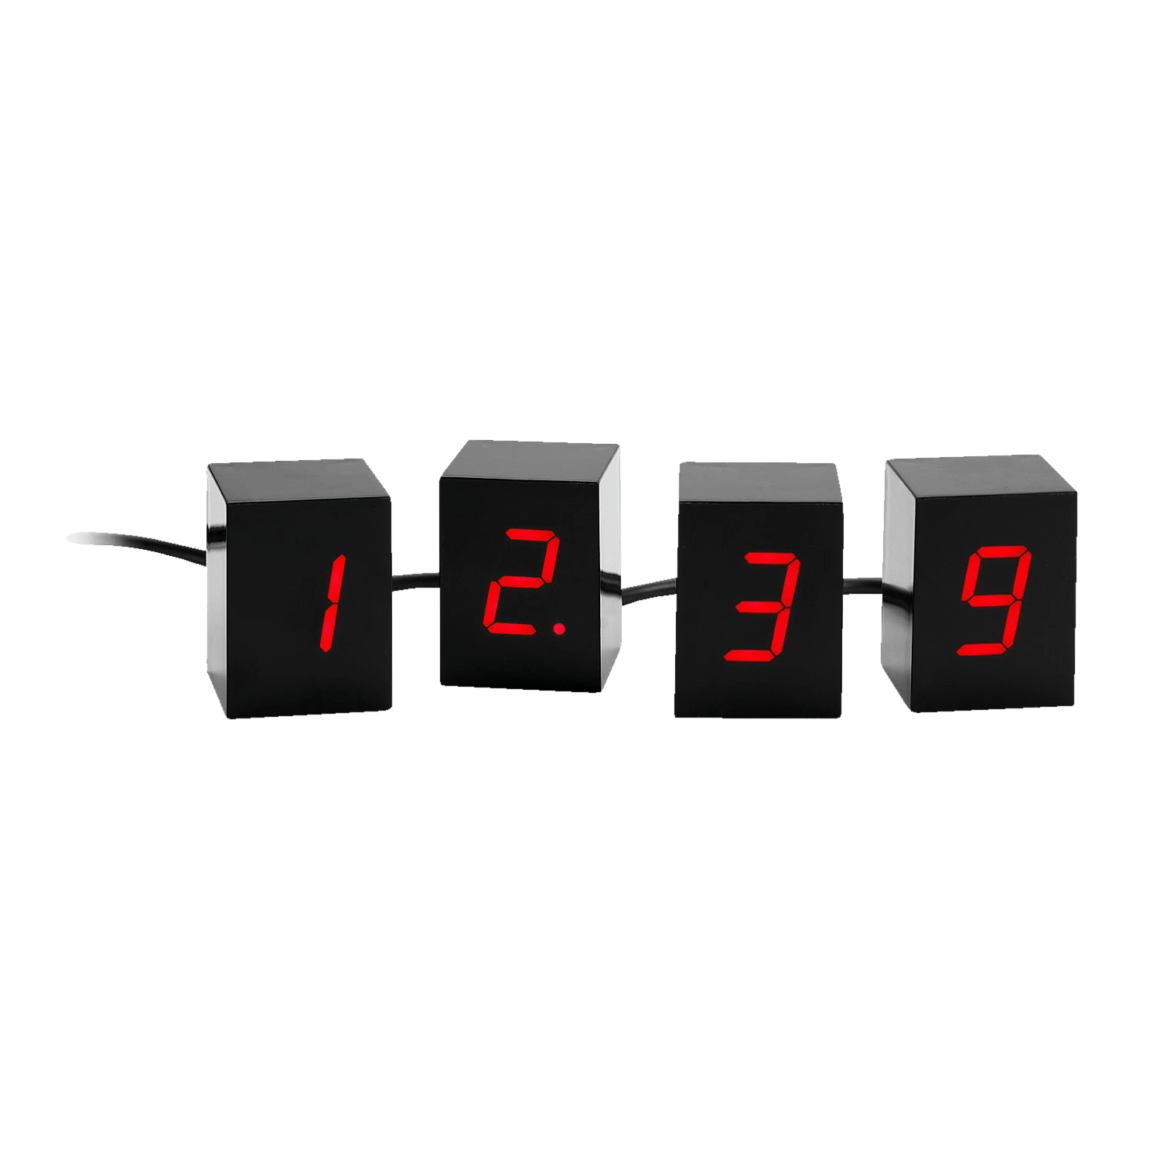 9 Of The Best Minimalist Alarm Clocks - numbers_led_clock_areaware